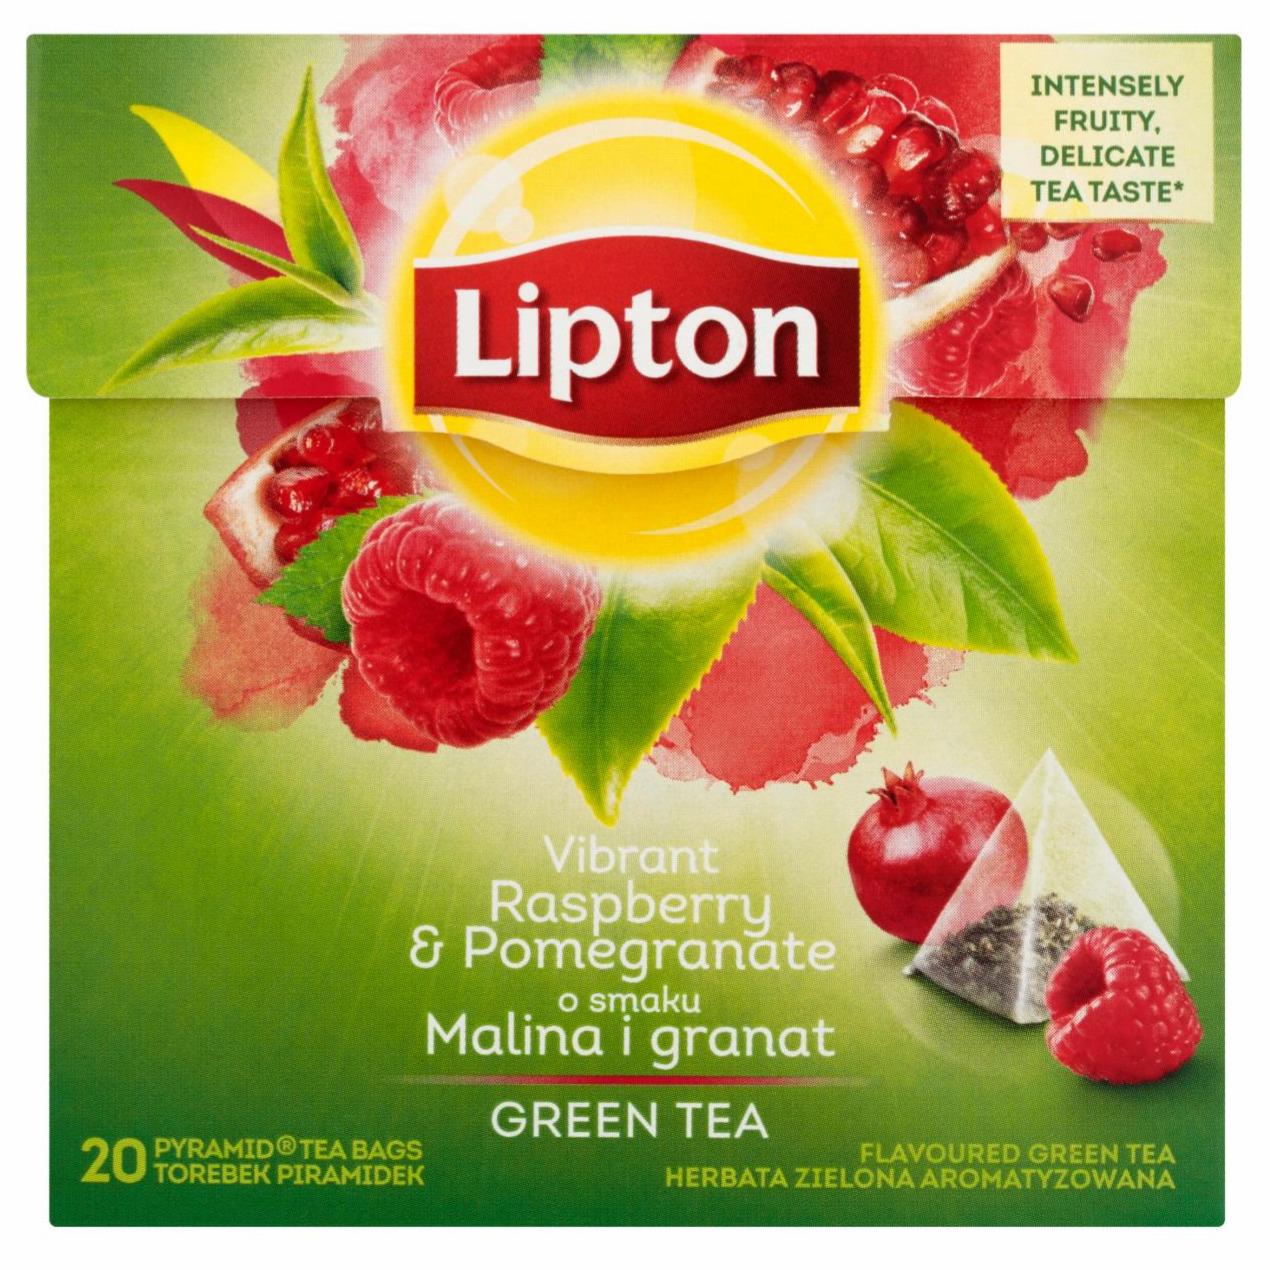 Zdjęcia - Lipton o smaku Malina i granat Herbata zielona aromatyzowana 28 g (20 torebek)